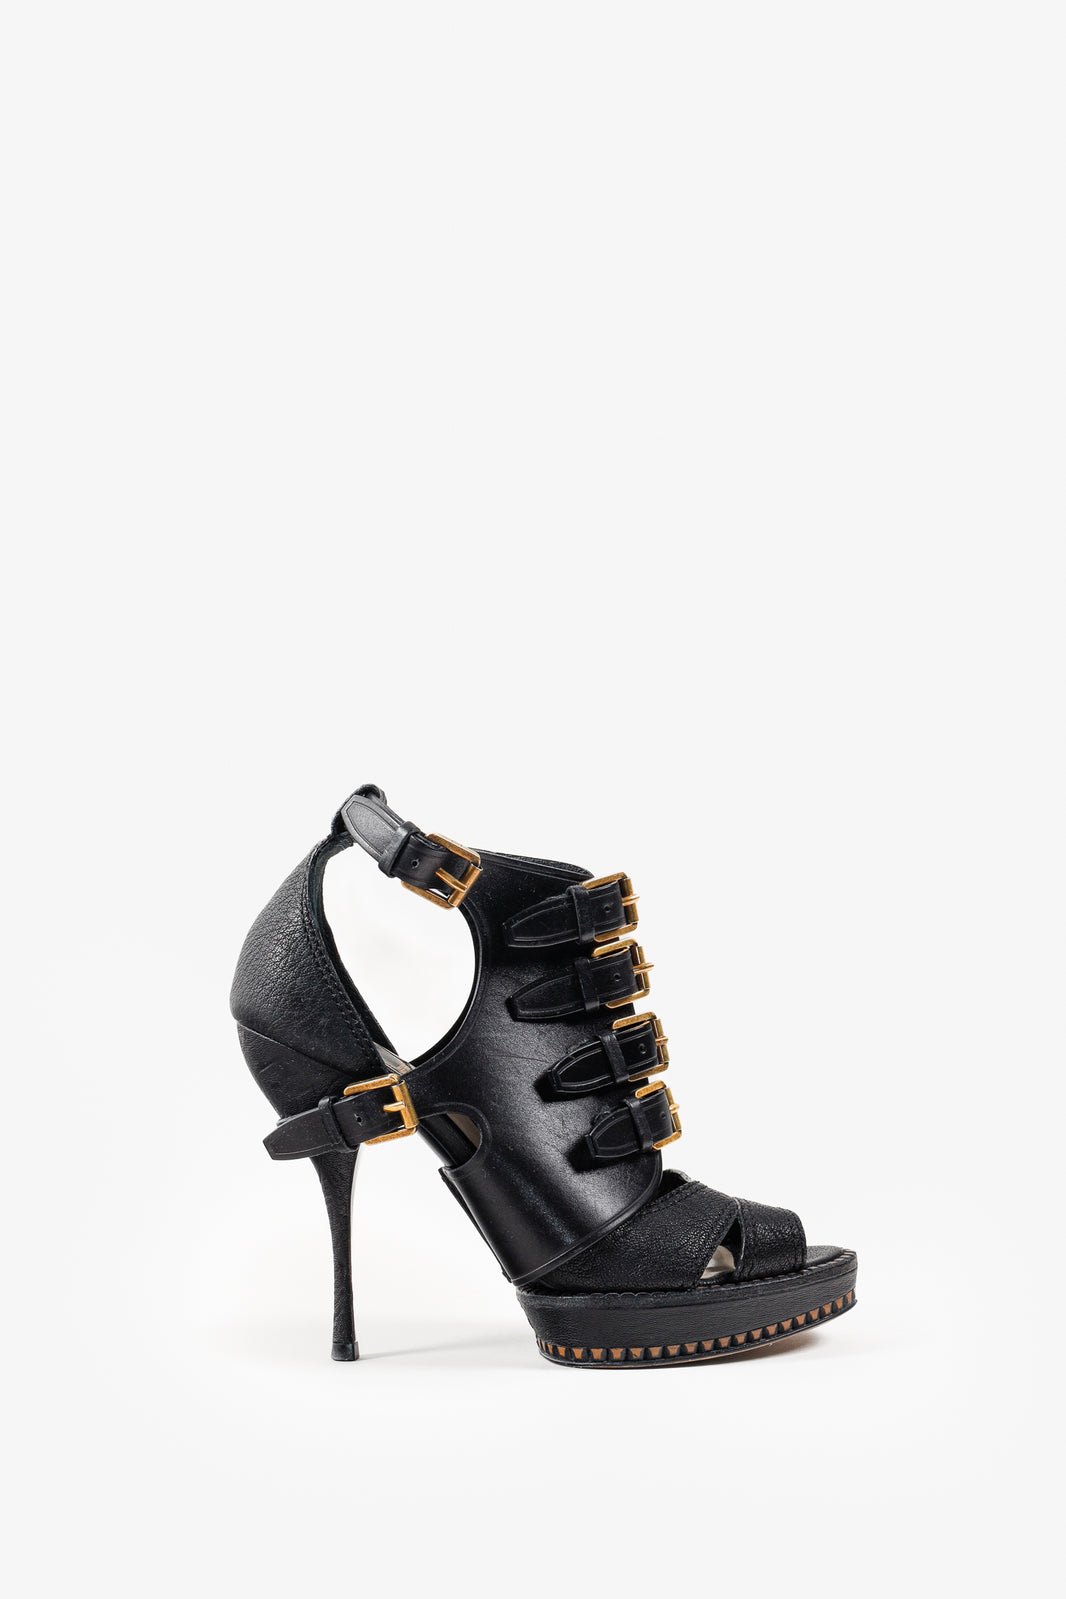 Christian Dior Black Leather Buckle Strap Peep-Toe Stiletto Heels